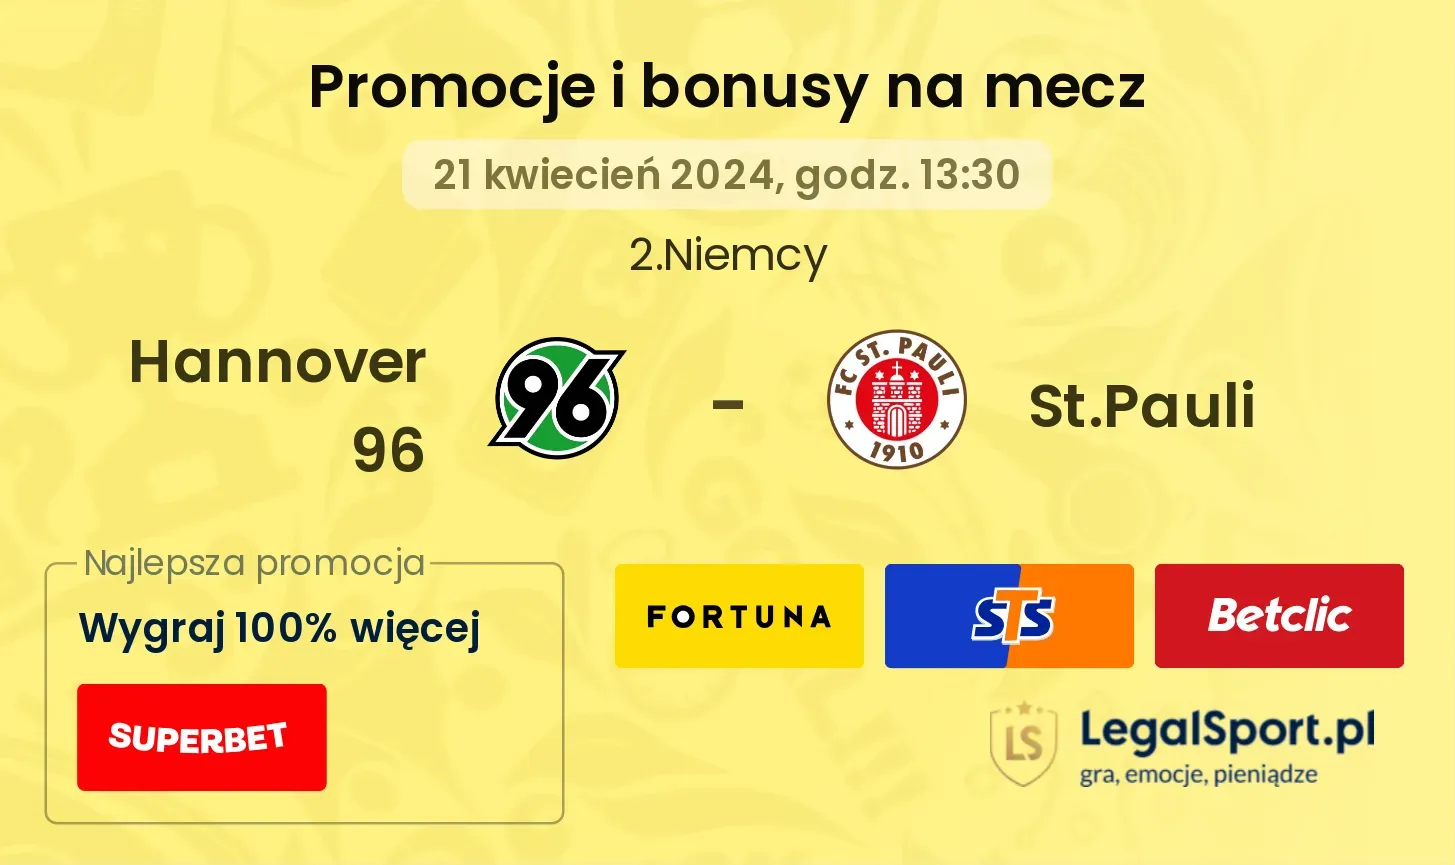 Hannover 96 - St.Pauli promocje bonusy na mecz